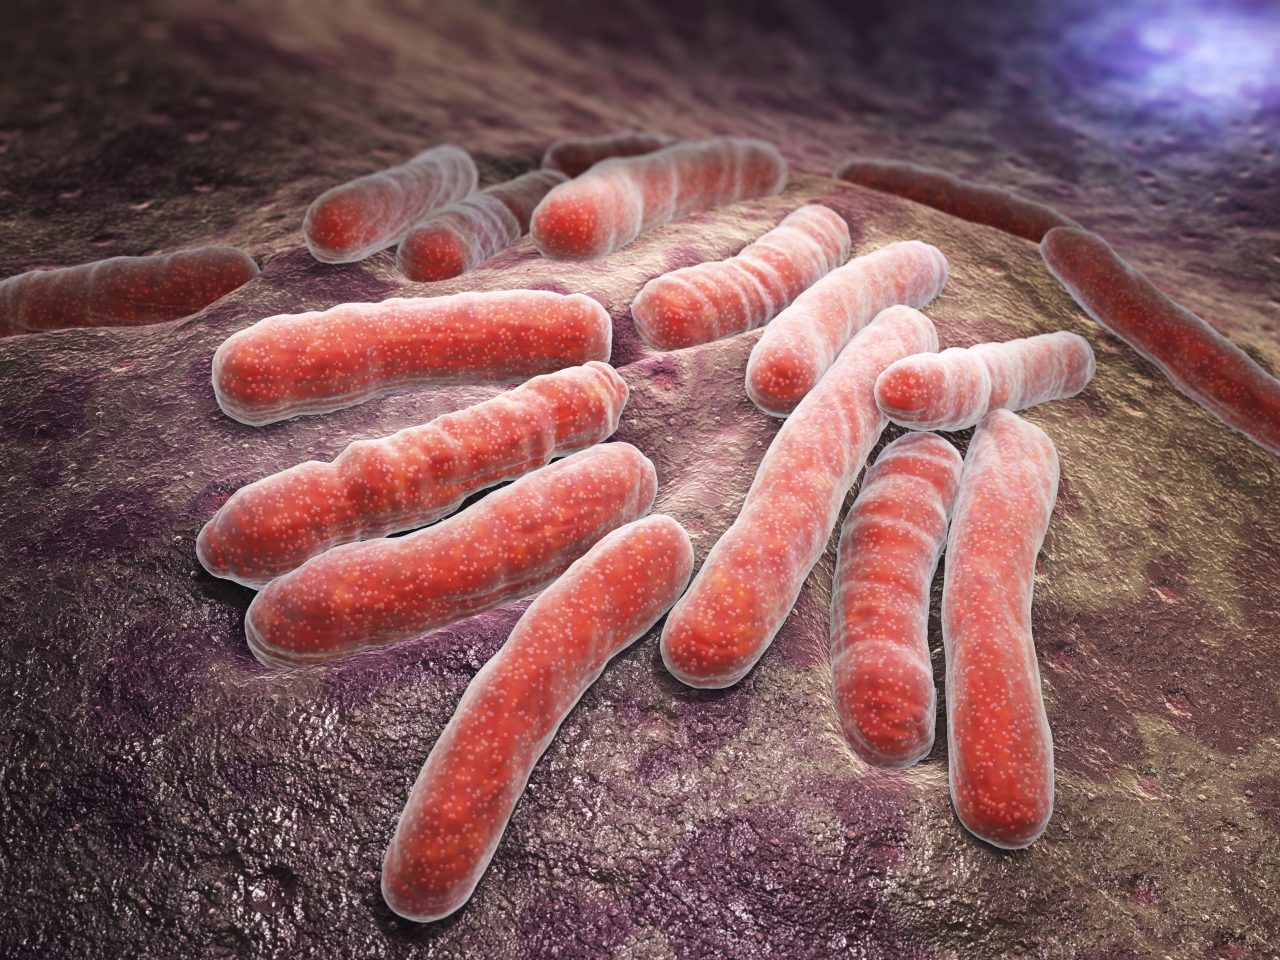 tuberculosis-bacteria-2021-08-26-15-33-01-utc-1-1280x960.jpg